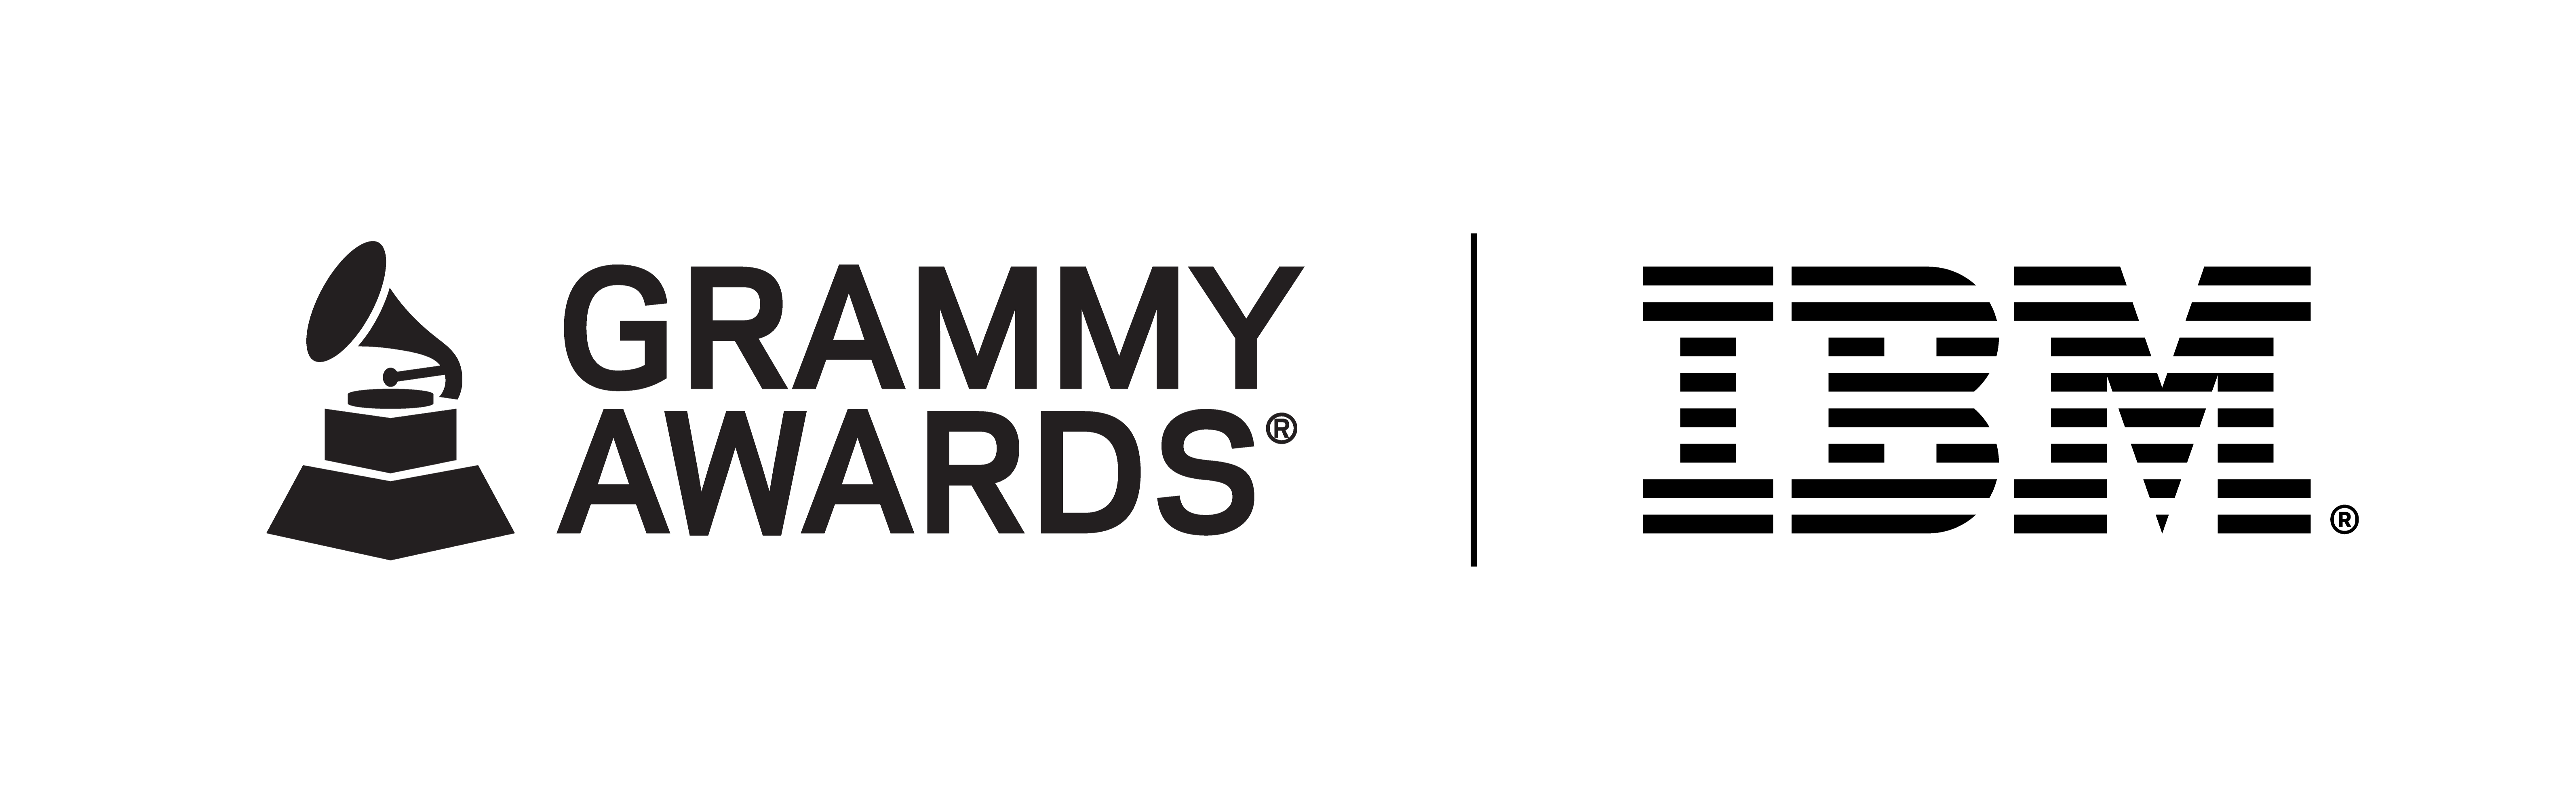 Le logo IBM-GRAMMY Awards enfermé avec gramophone